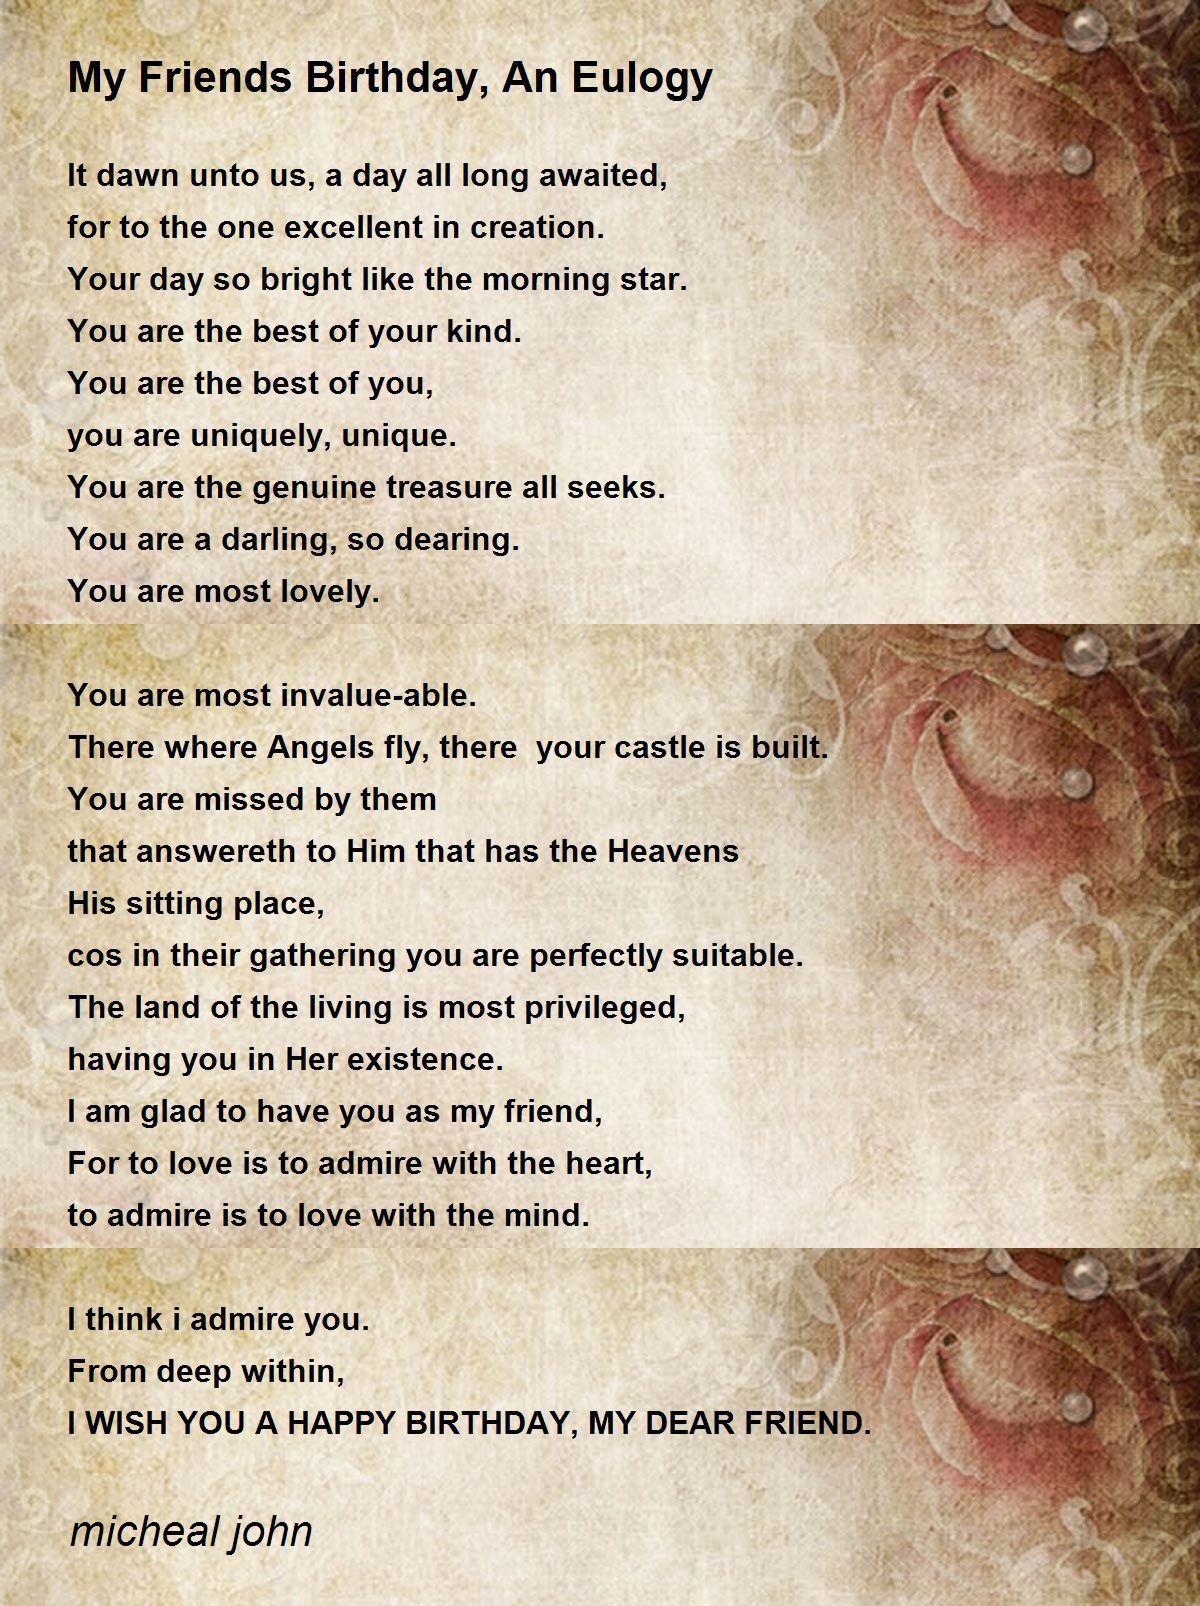 My Friends Birthday, An Eulogy Poem by micheal john - Poem Hunter